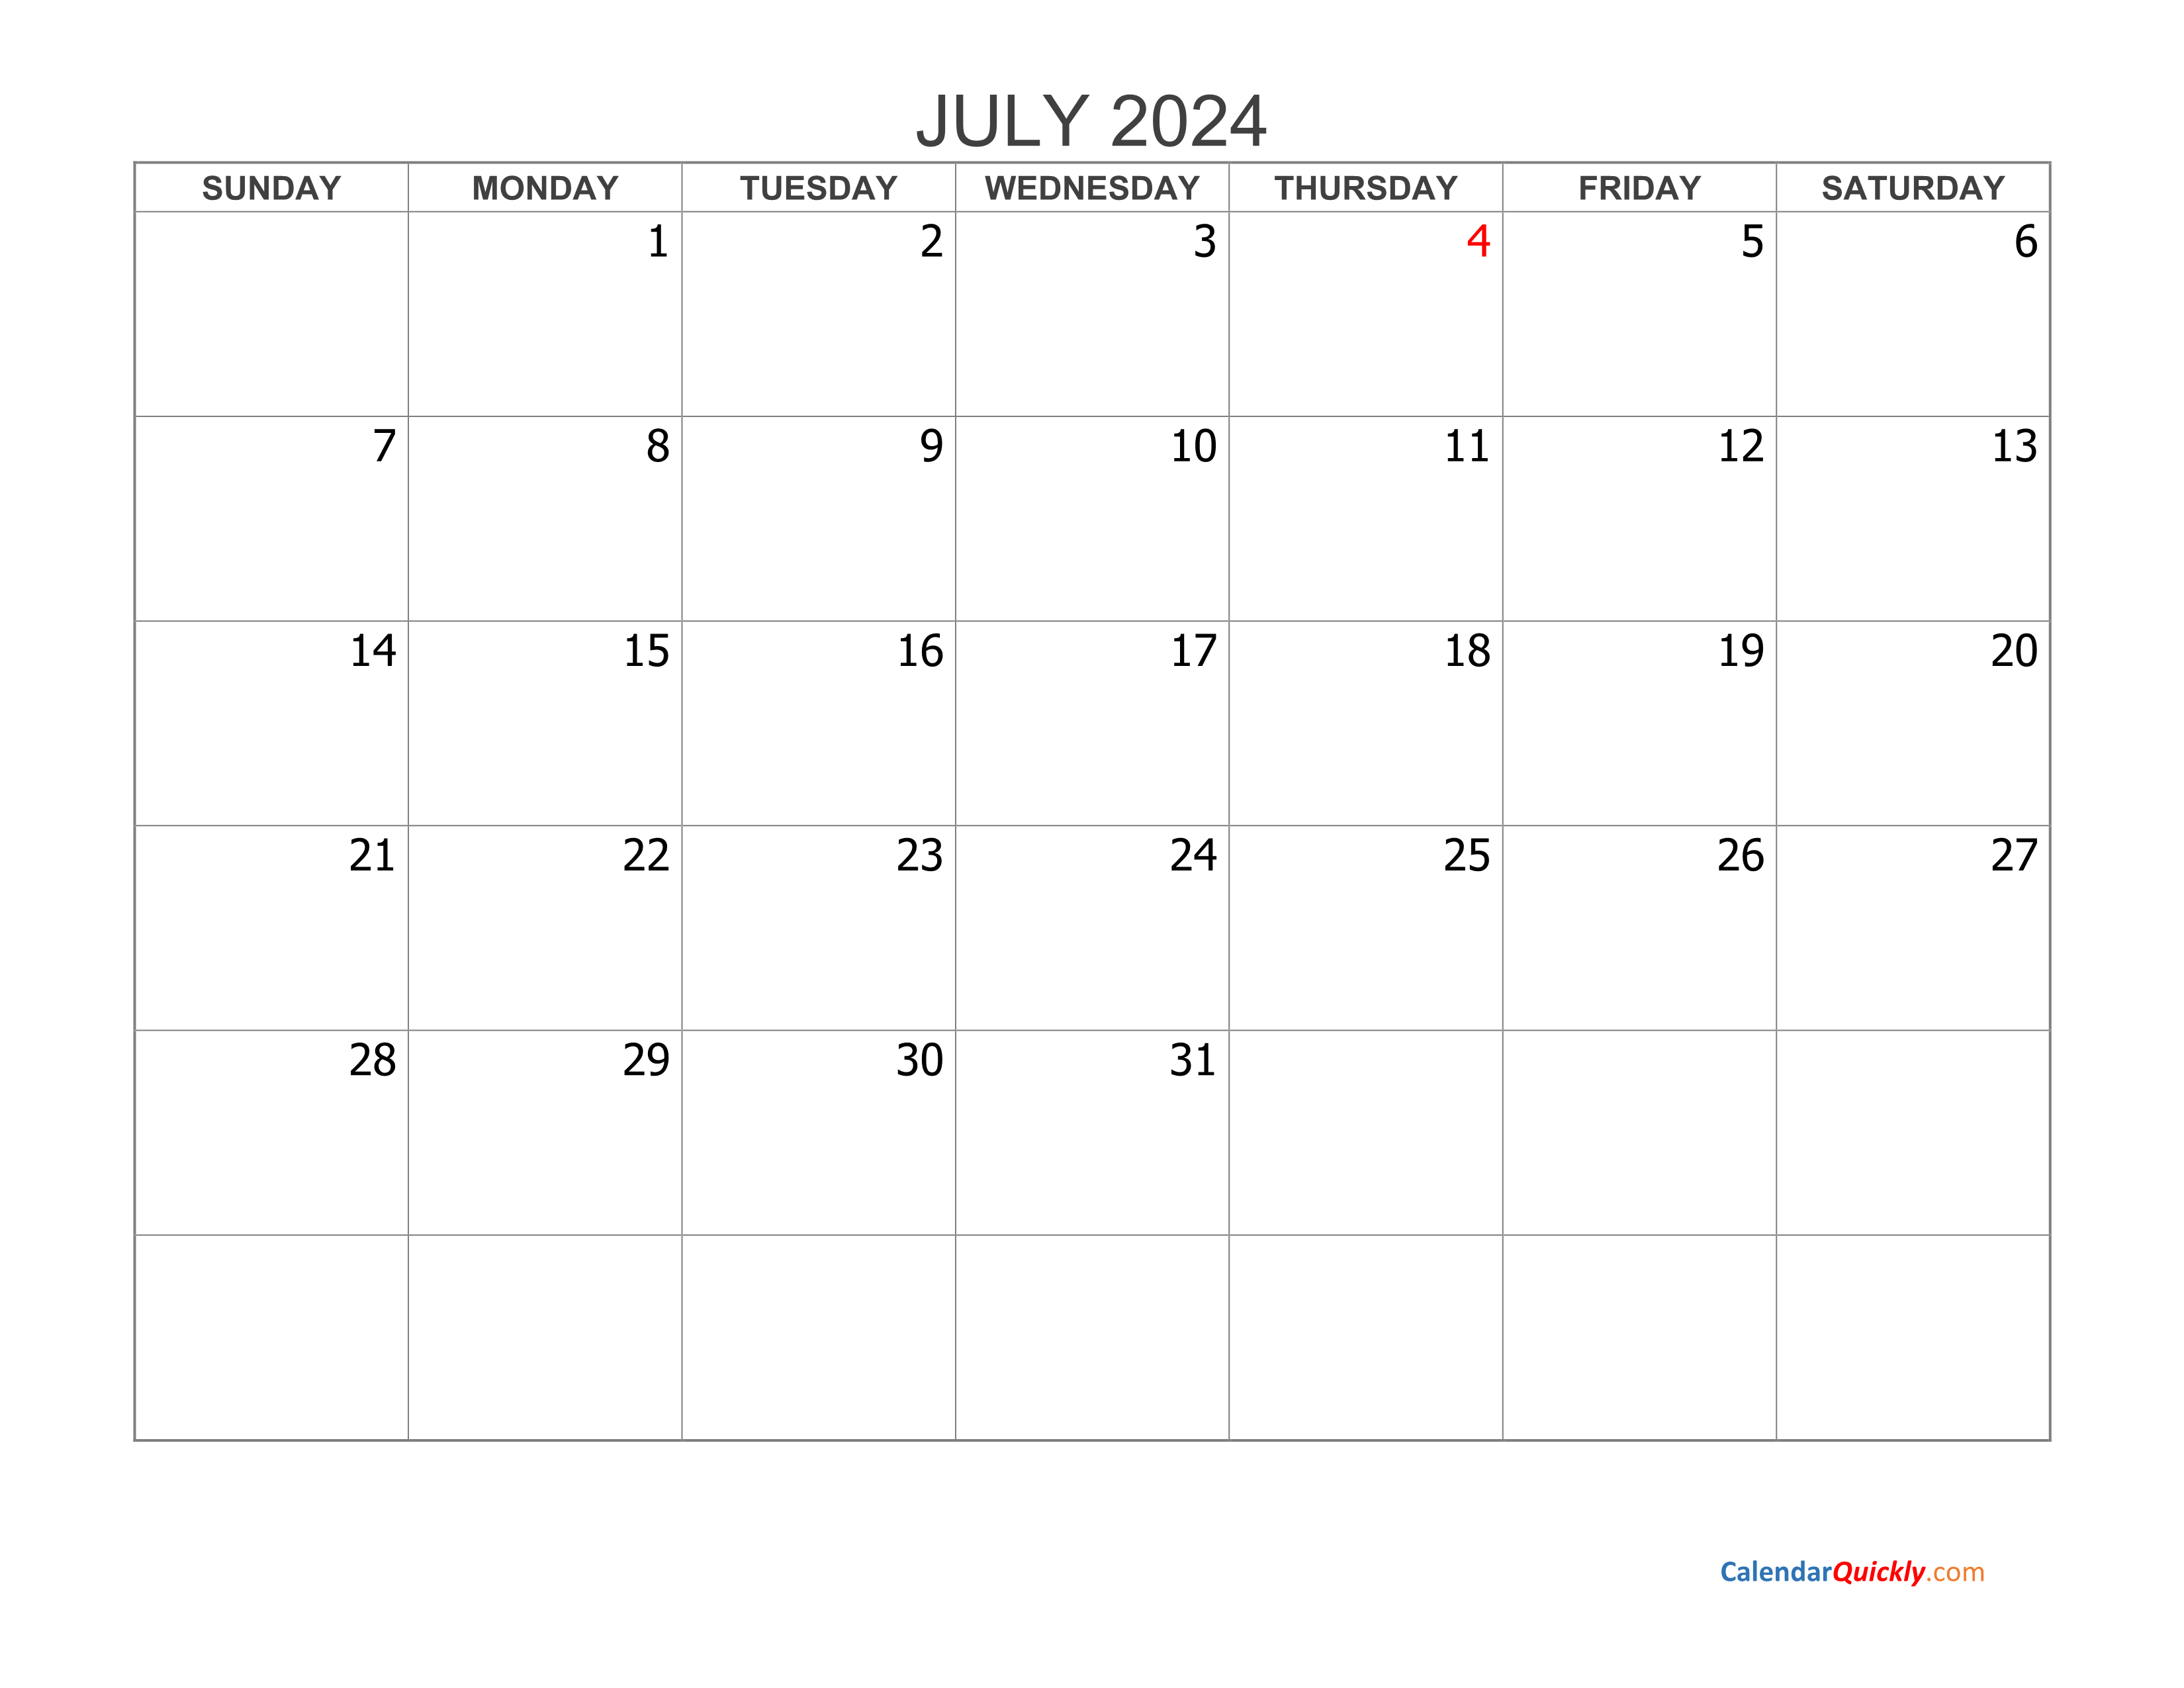 July Calendar 2024 Printable Calendar Quickly Vrogue vrogue.co